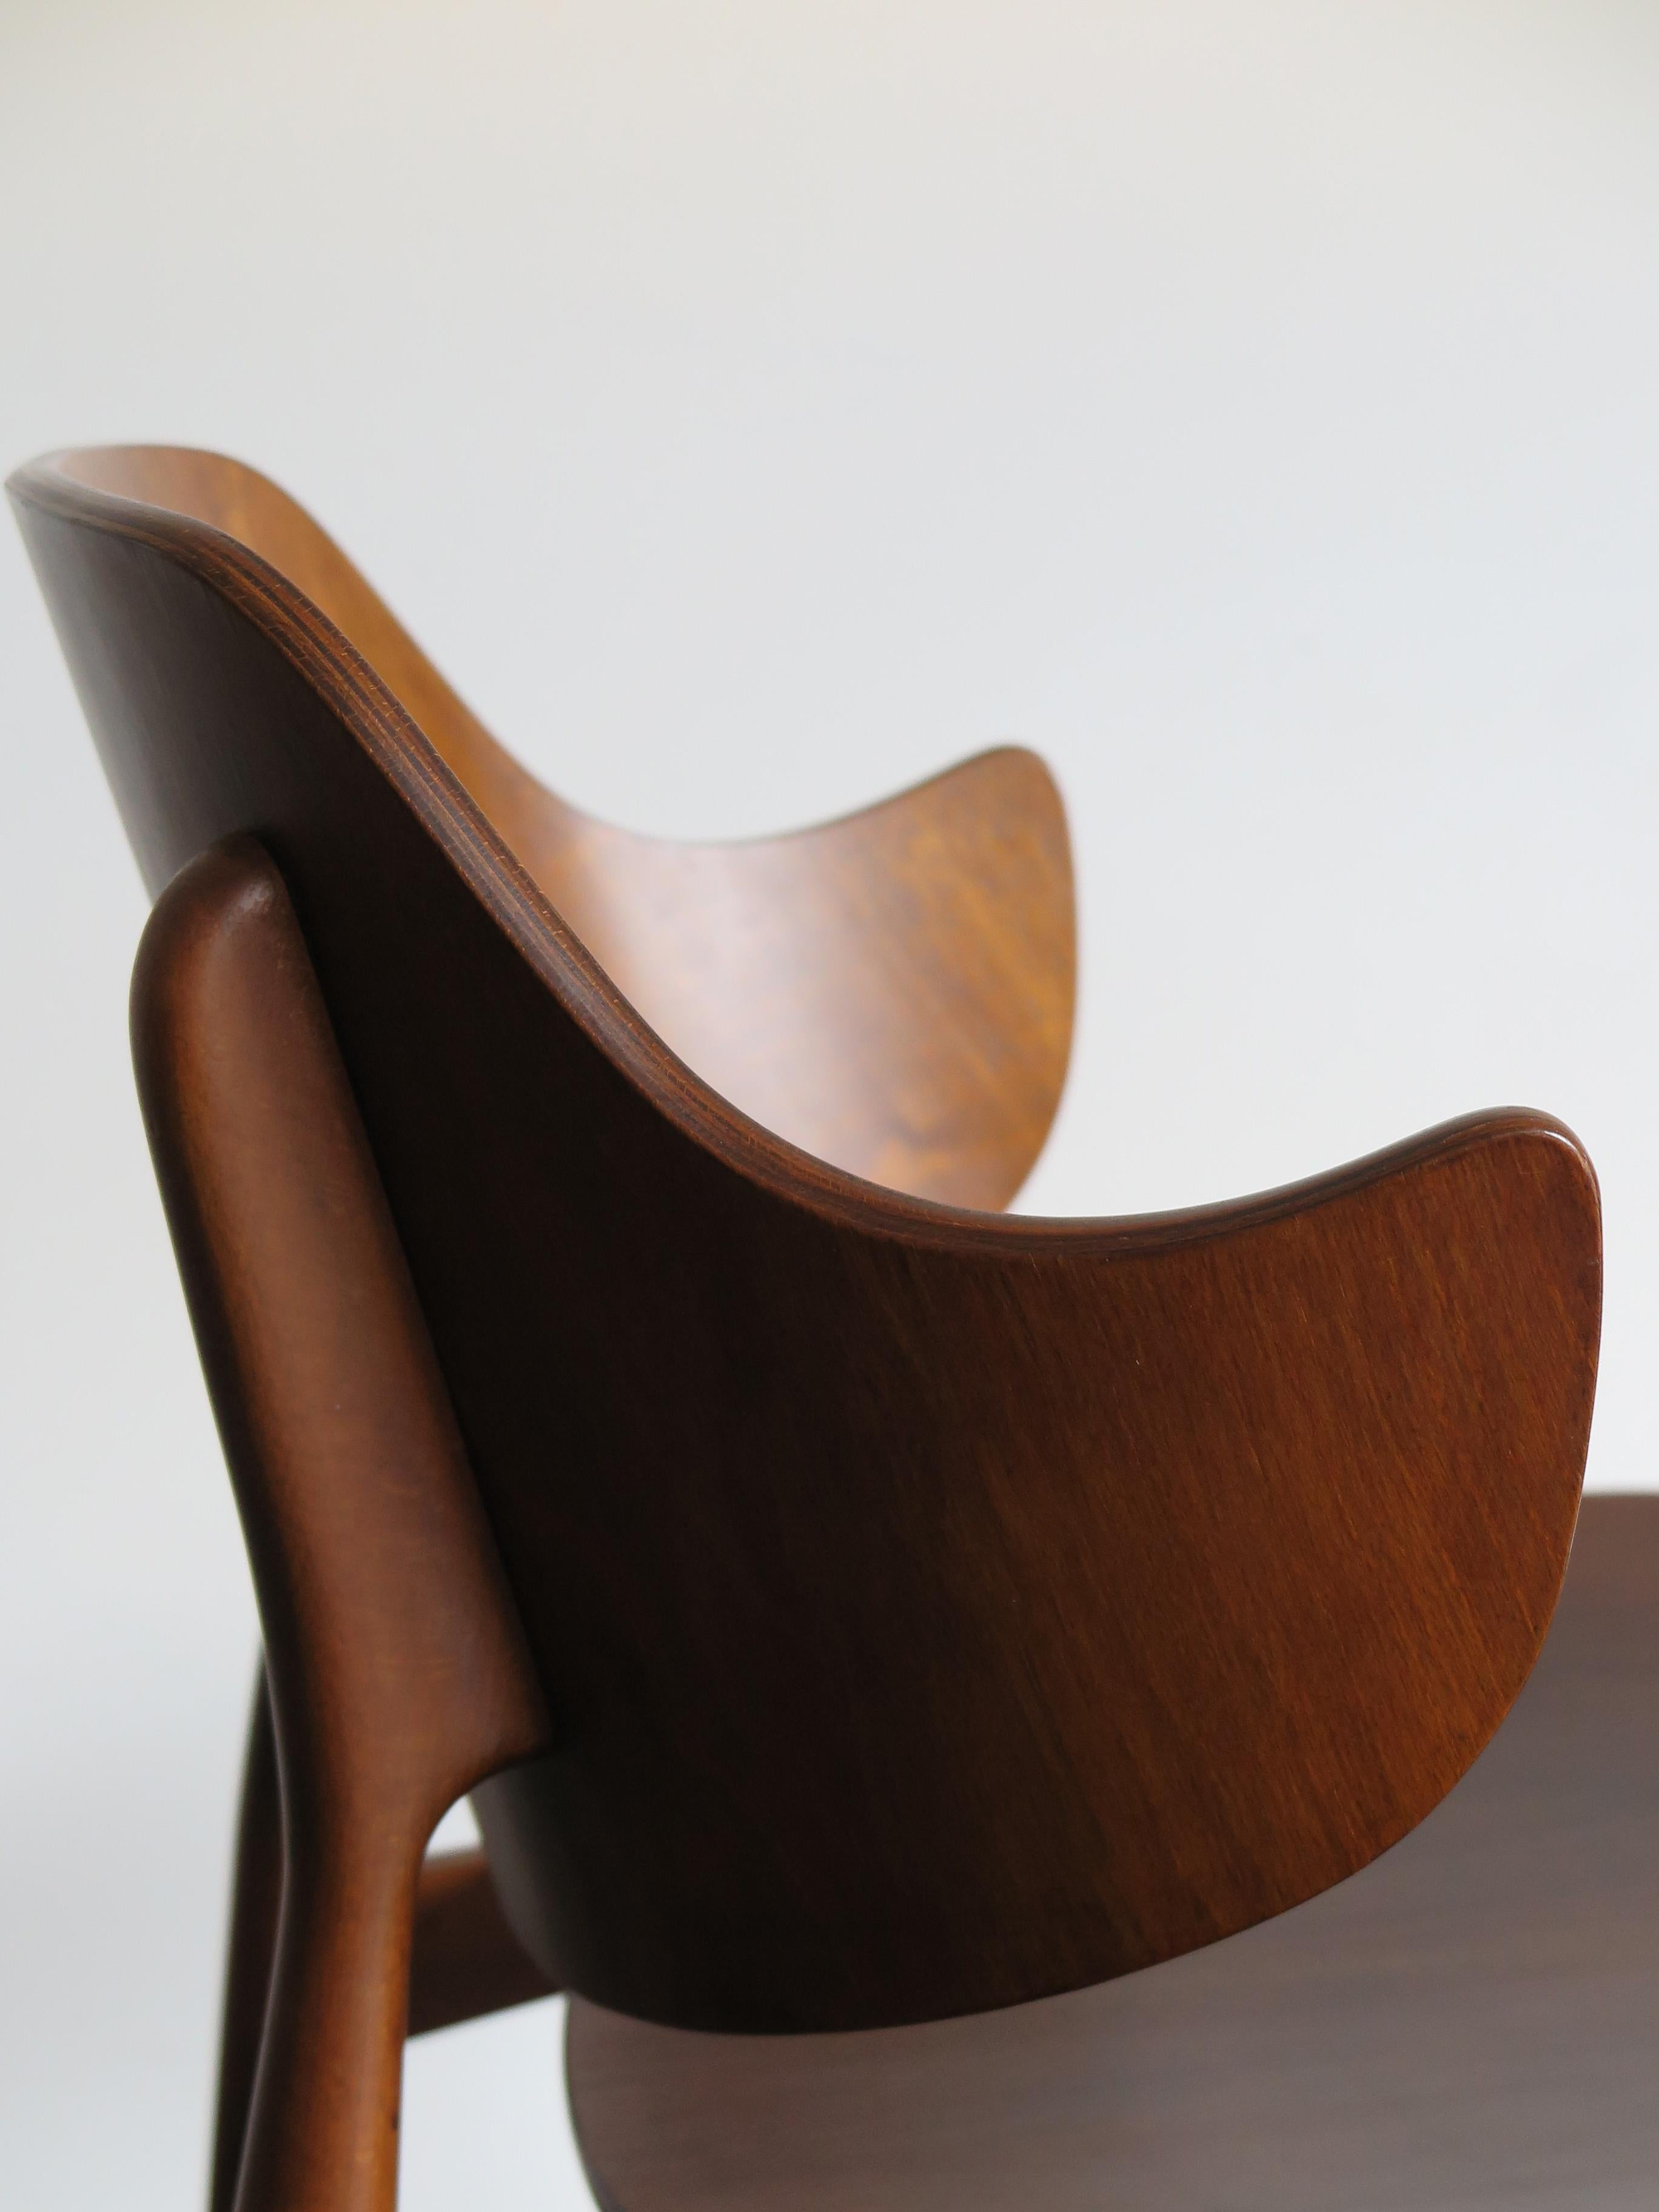 Jens Hjorth Scandinavian Midcentury Modern Wood Chairs Armchairs, 1950s 4